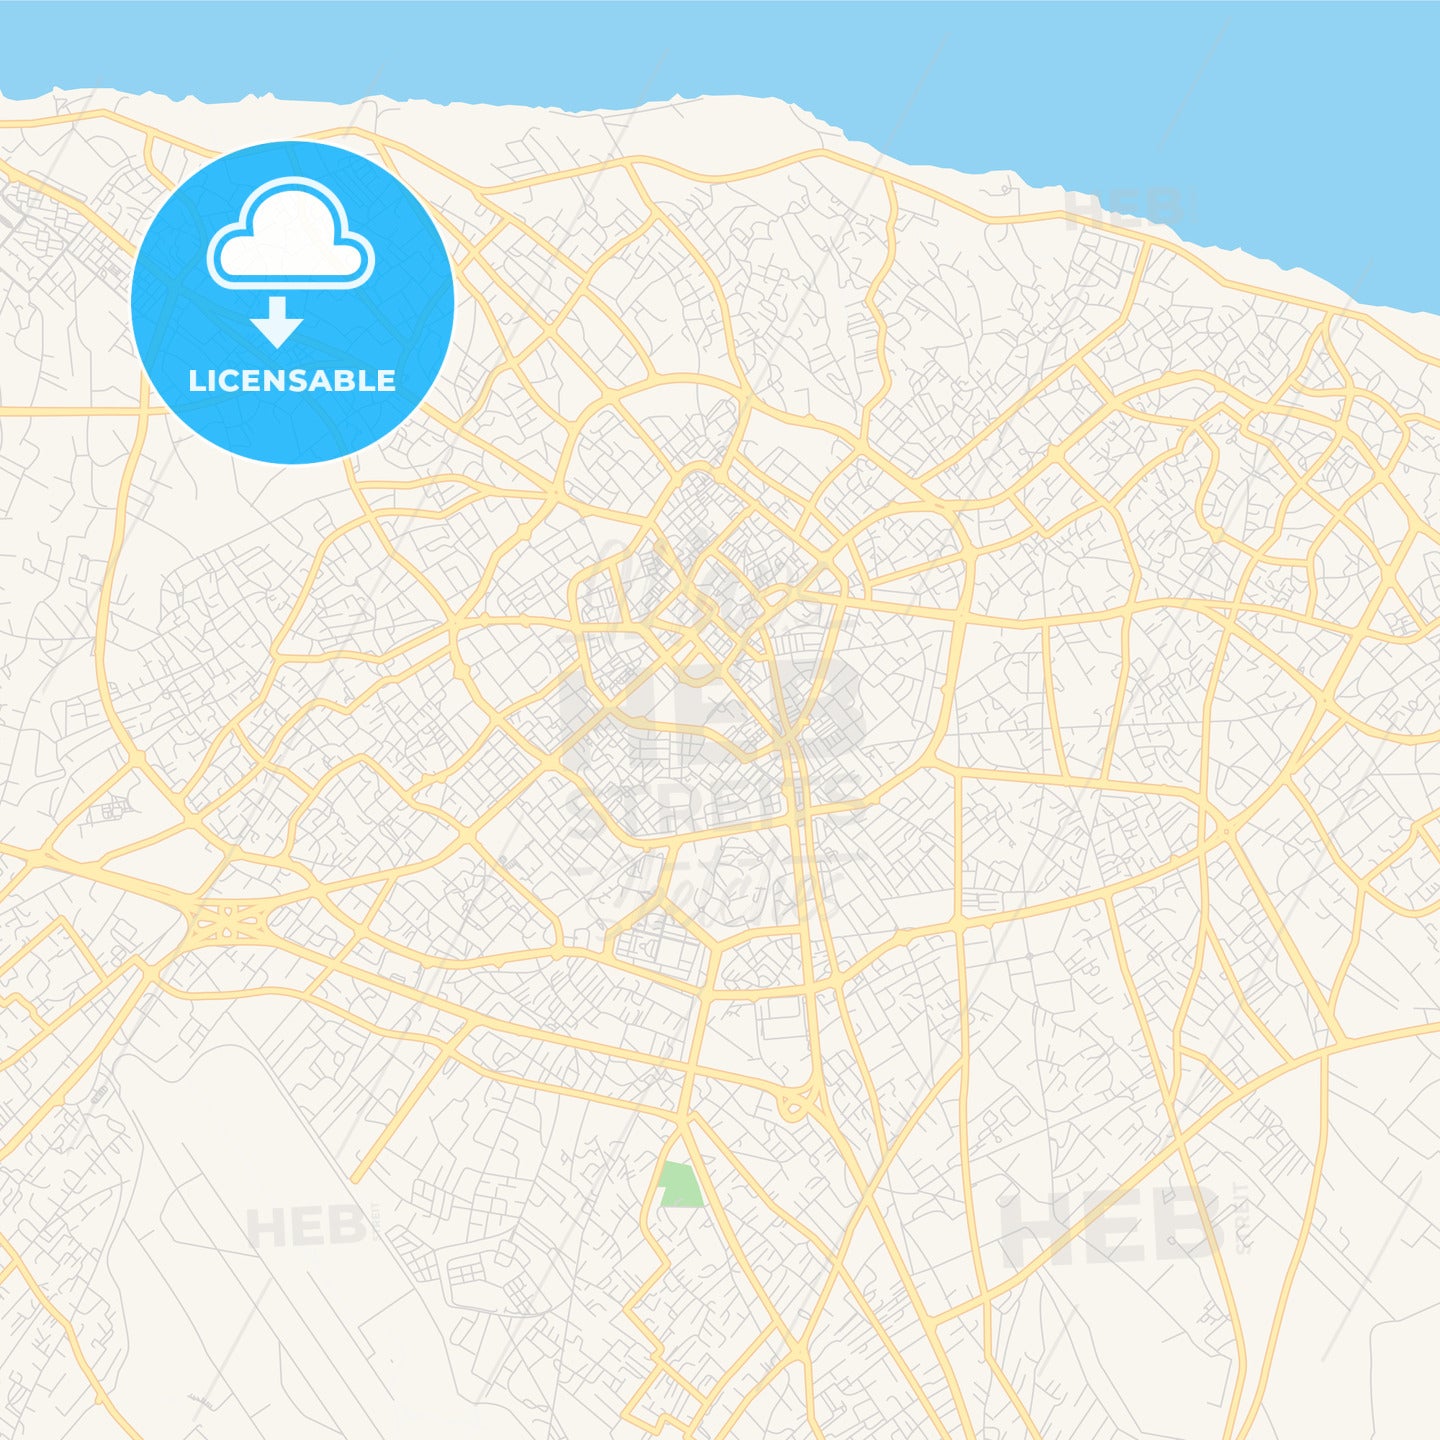 Printable street map of Misratah, Libya